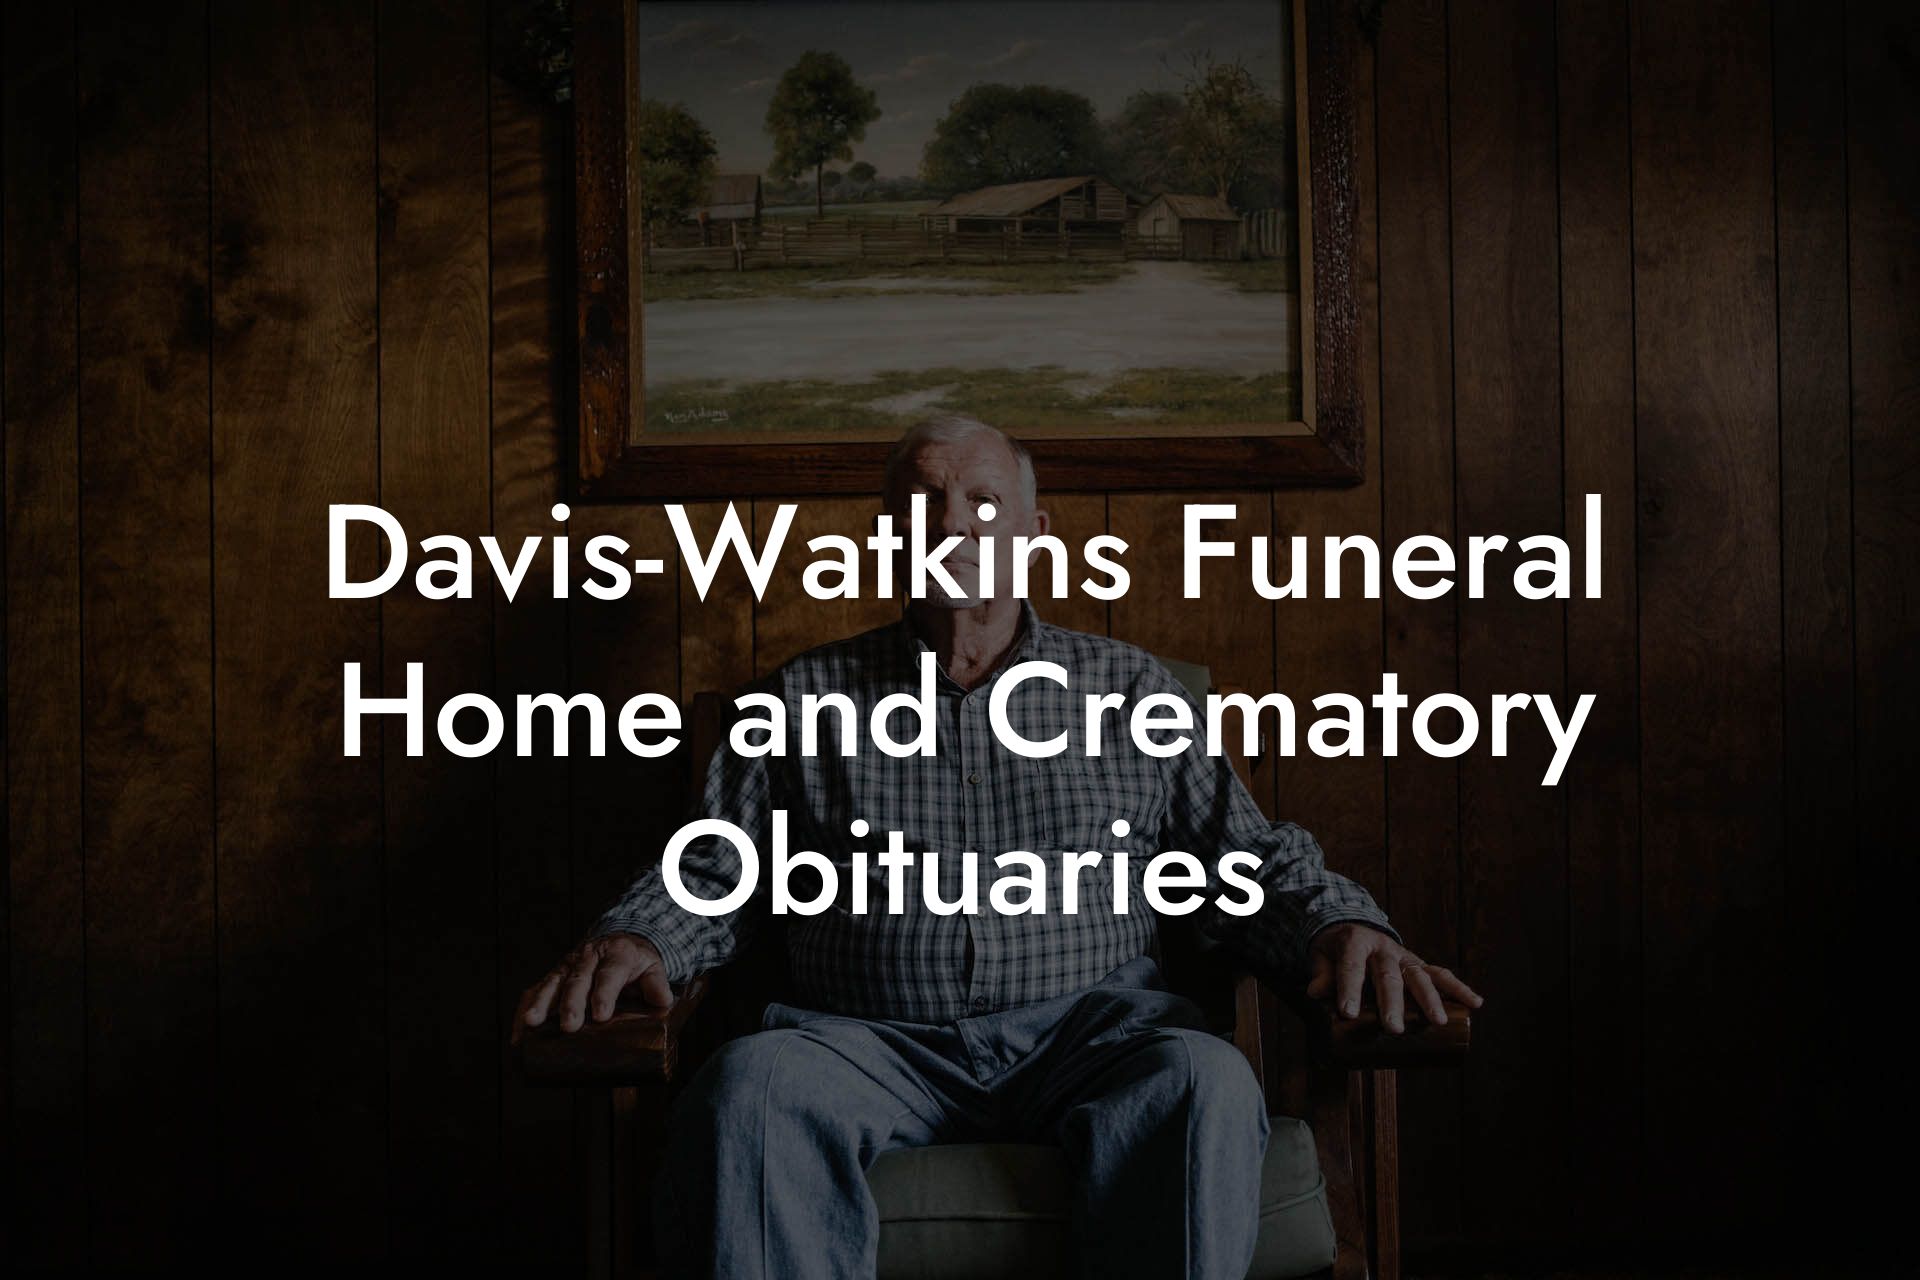 Davis-Watkins Funeral Home and Crematory Obituaries